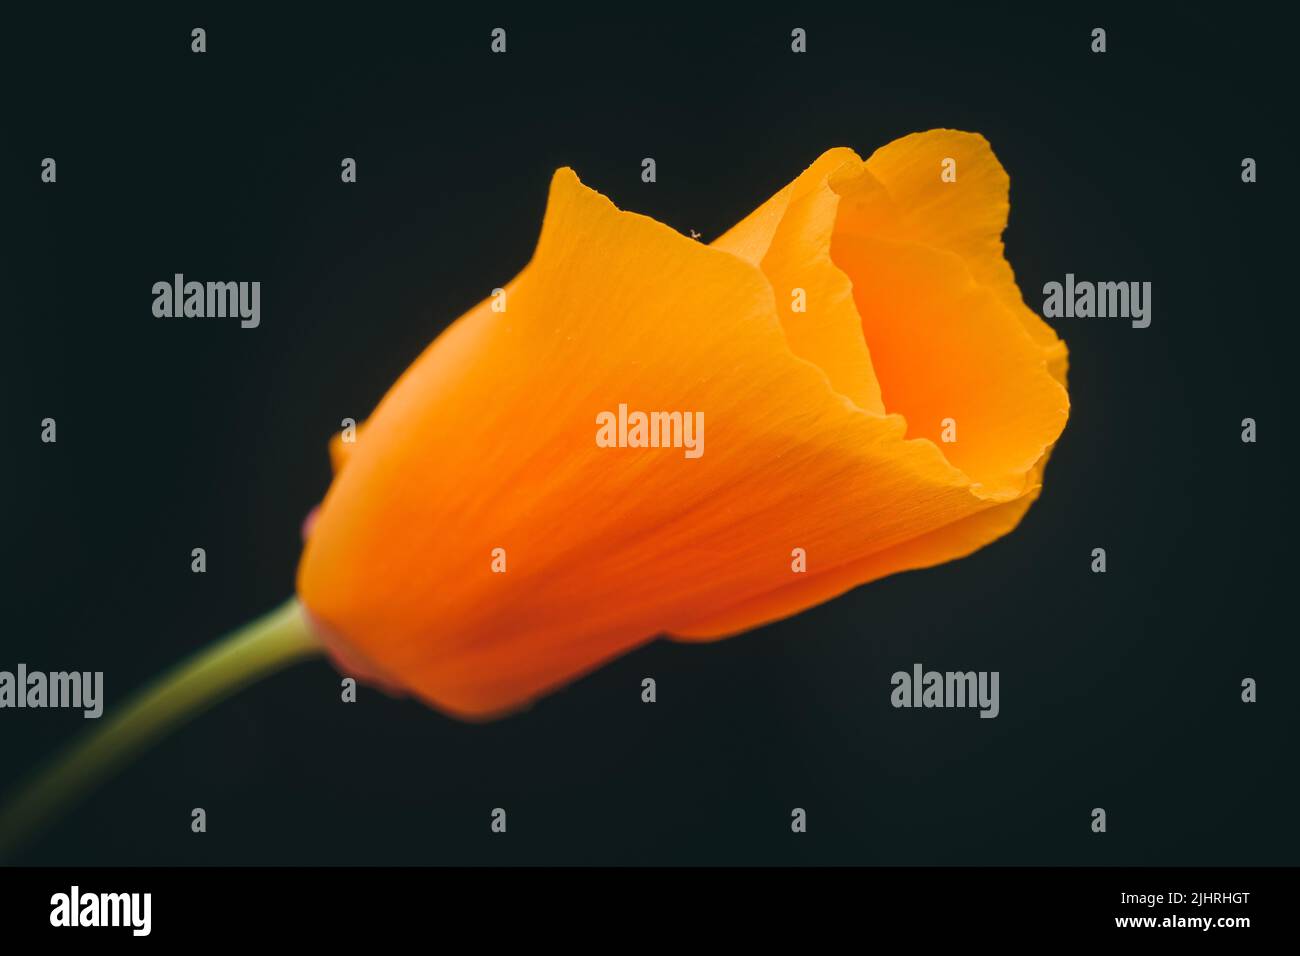 A macro shot of an orange california poppy flower on a black background Stock Photo